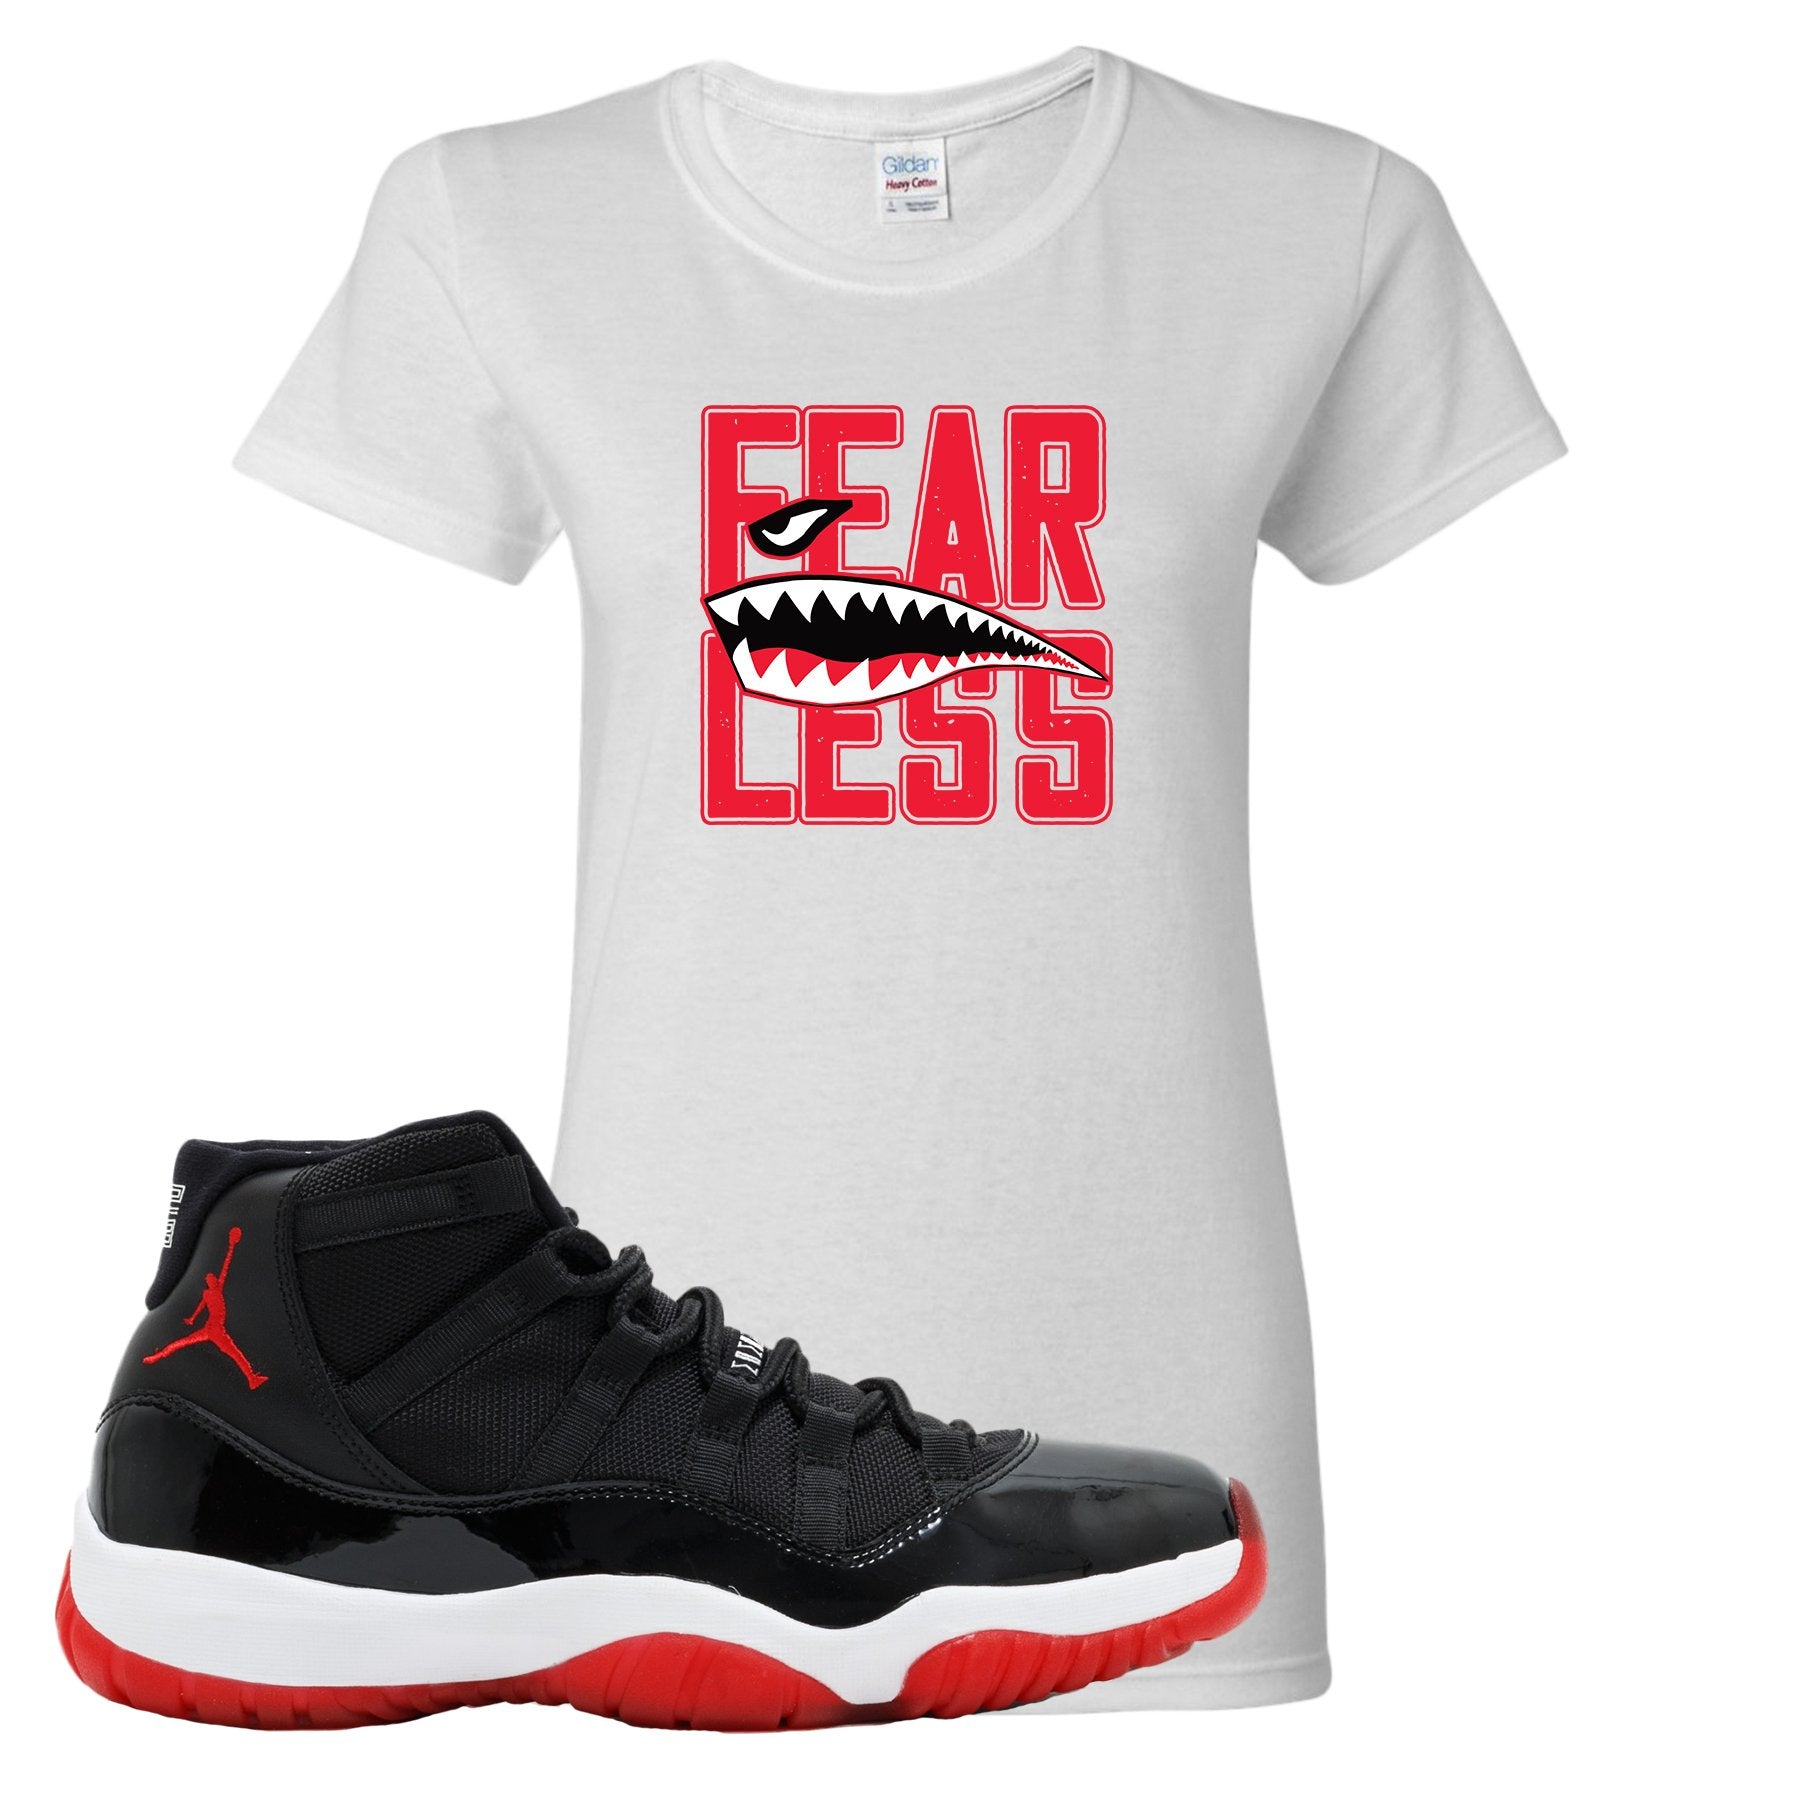 Jordan 11 Bred Fearless White Sneaker Hook Up Women's T-Shirt